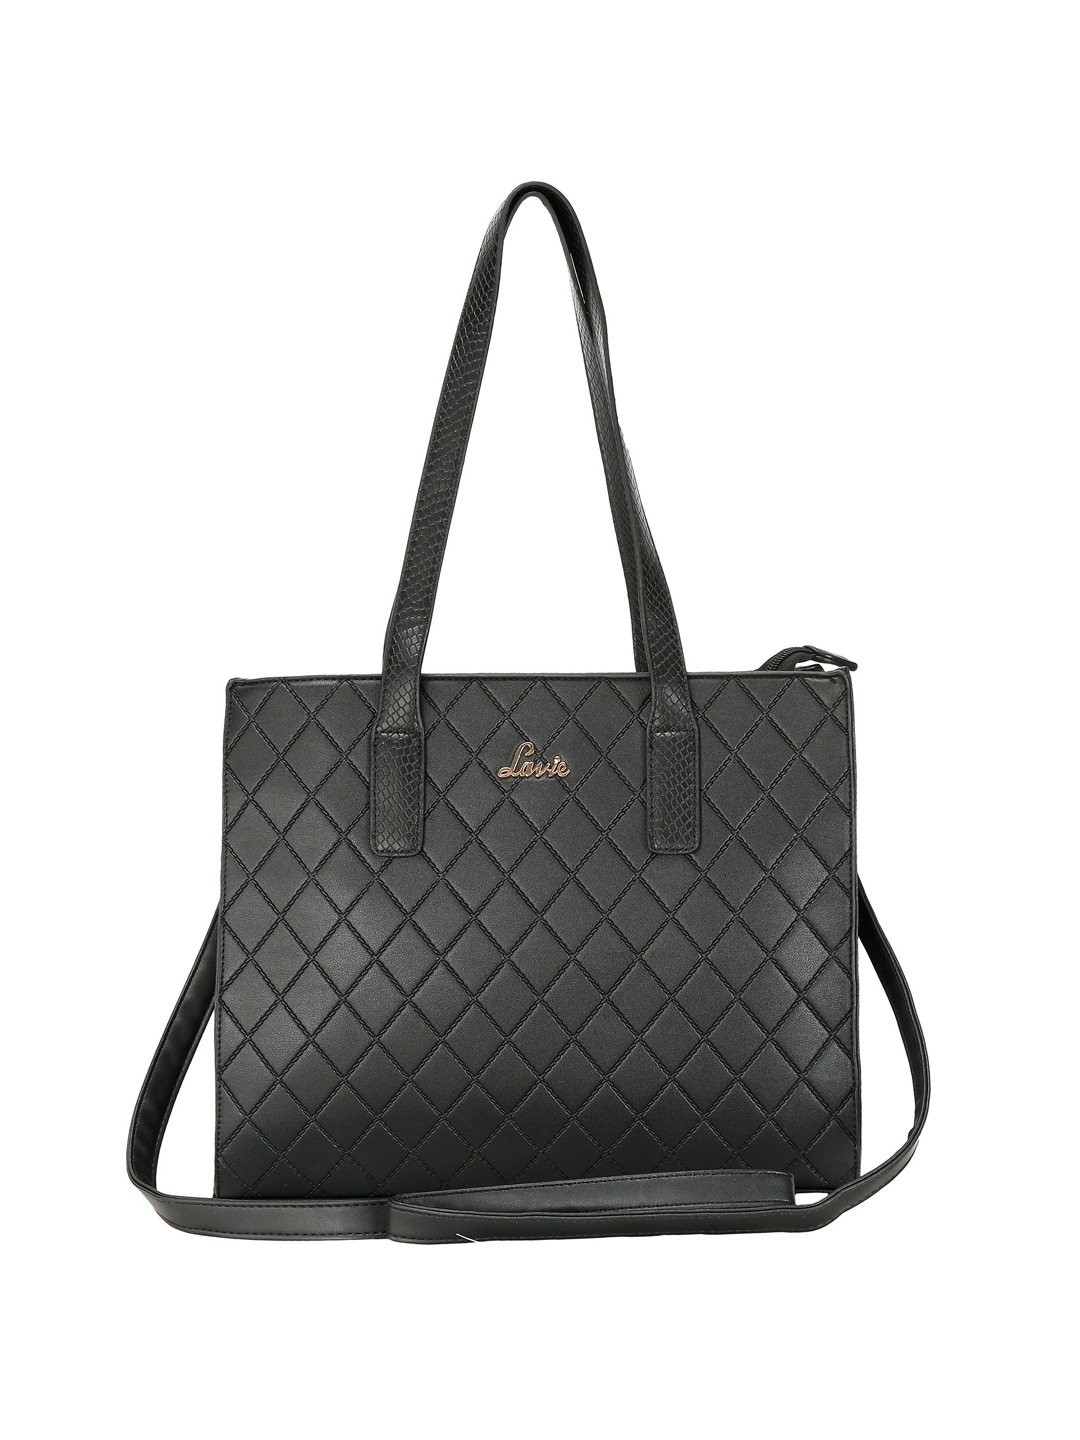 Buy Lavie Black Quilted Shoulder Bag - Handbags for Women 15418718 | Myntra